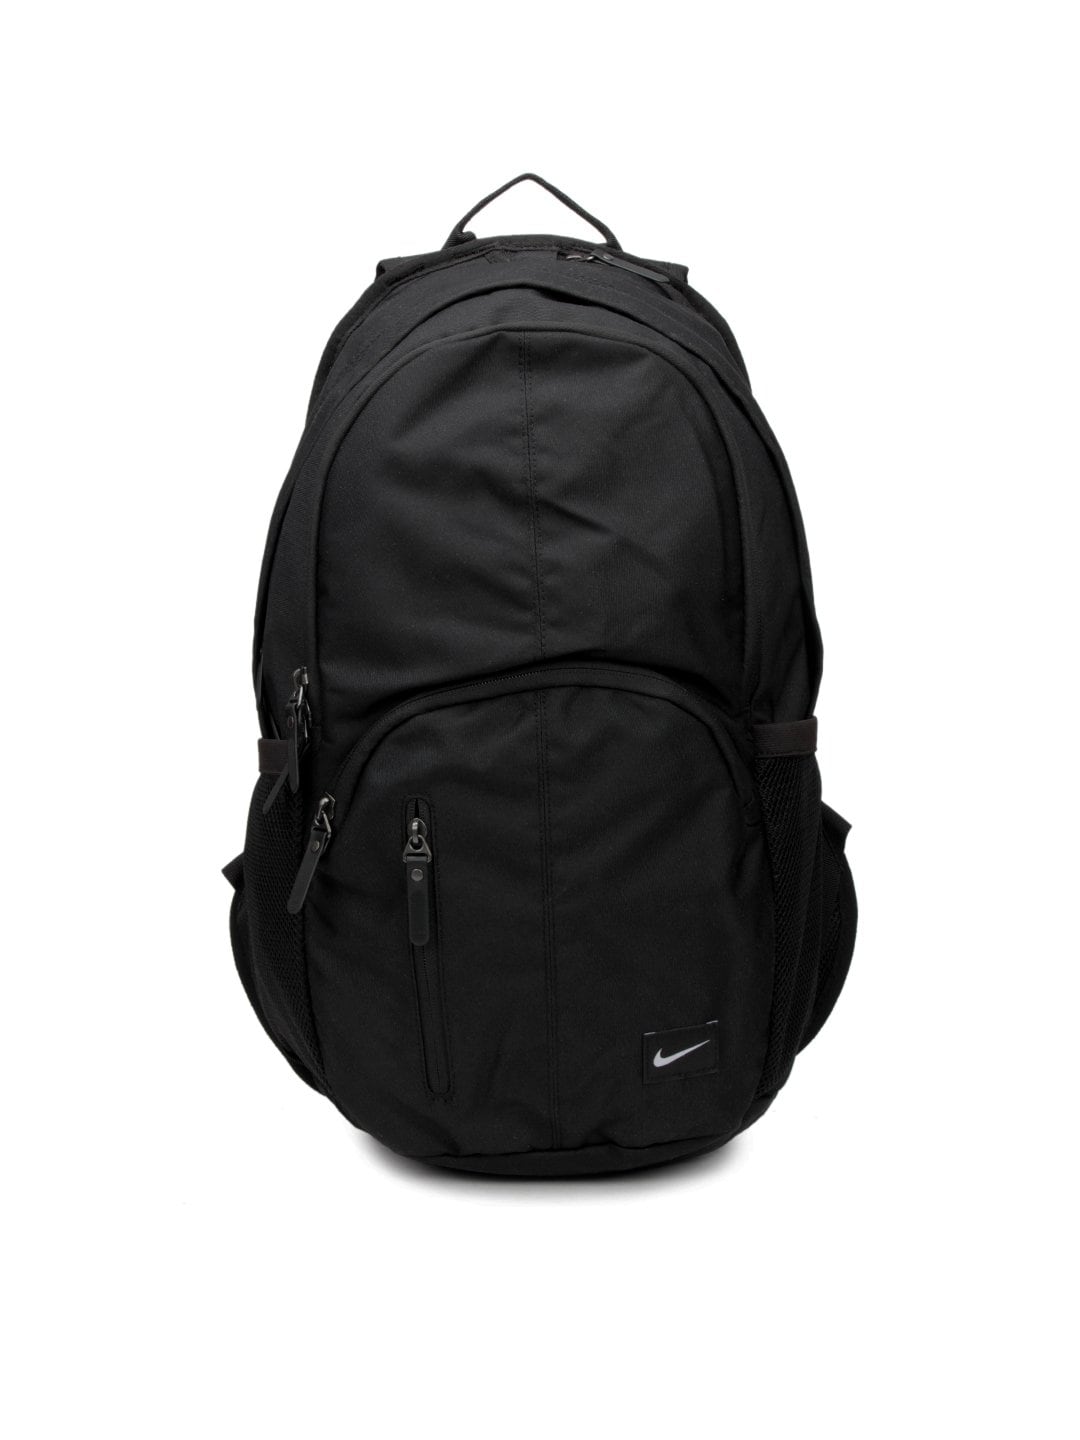 Nike Unisex Hayward Black Backpack